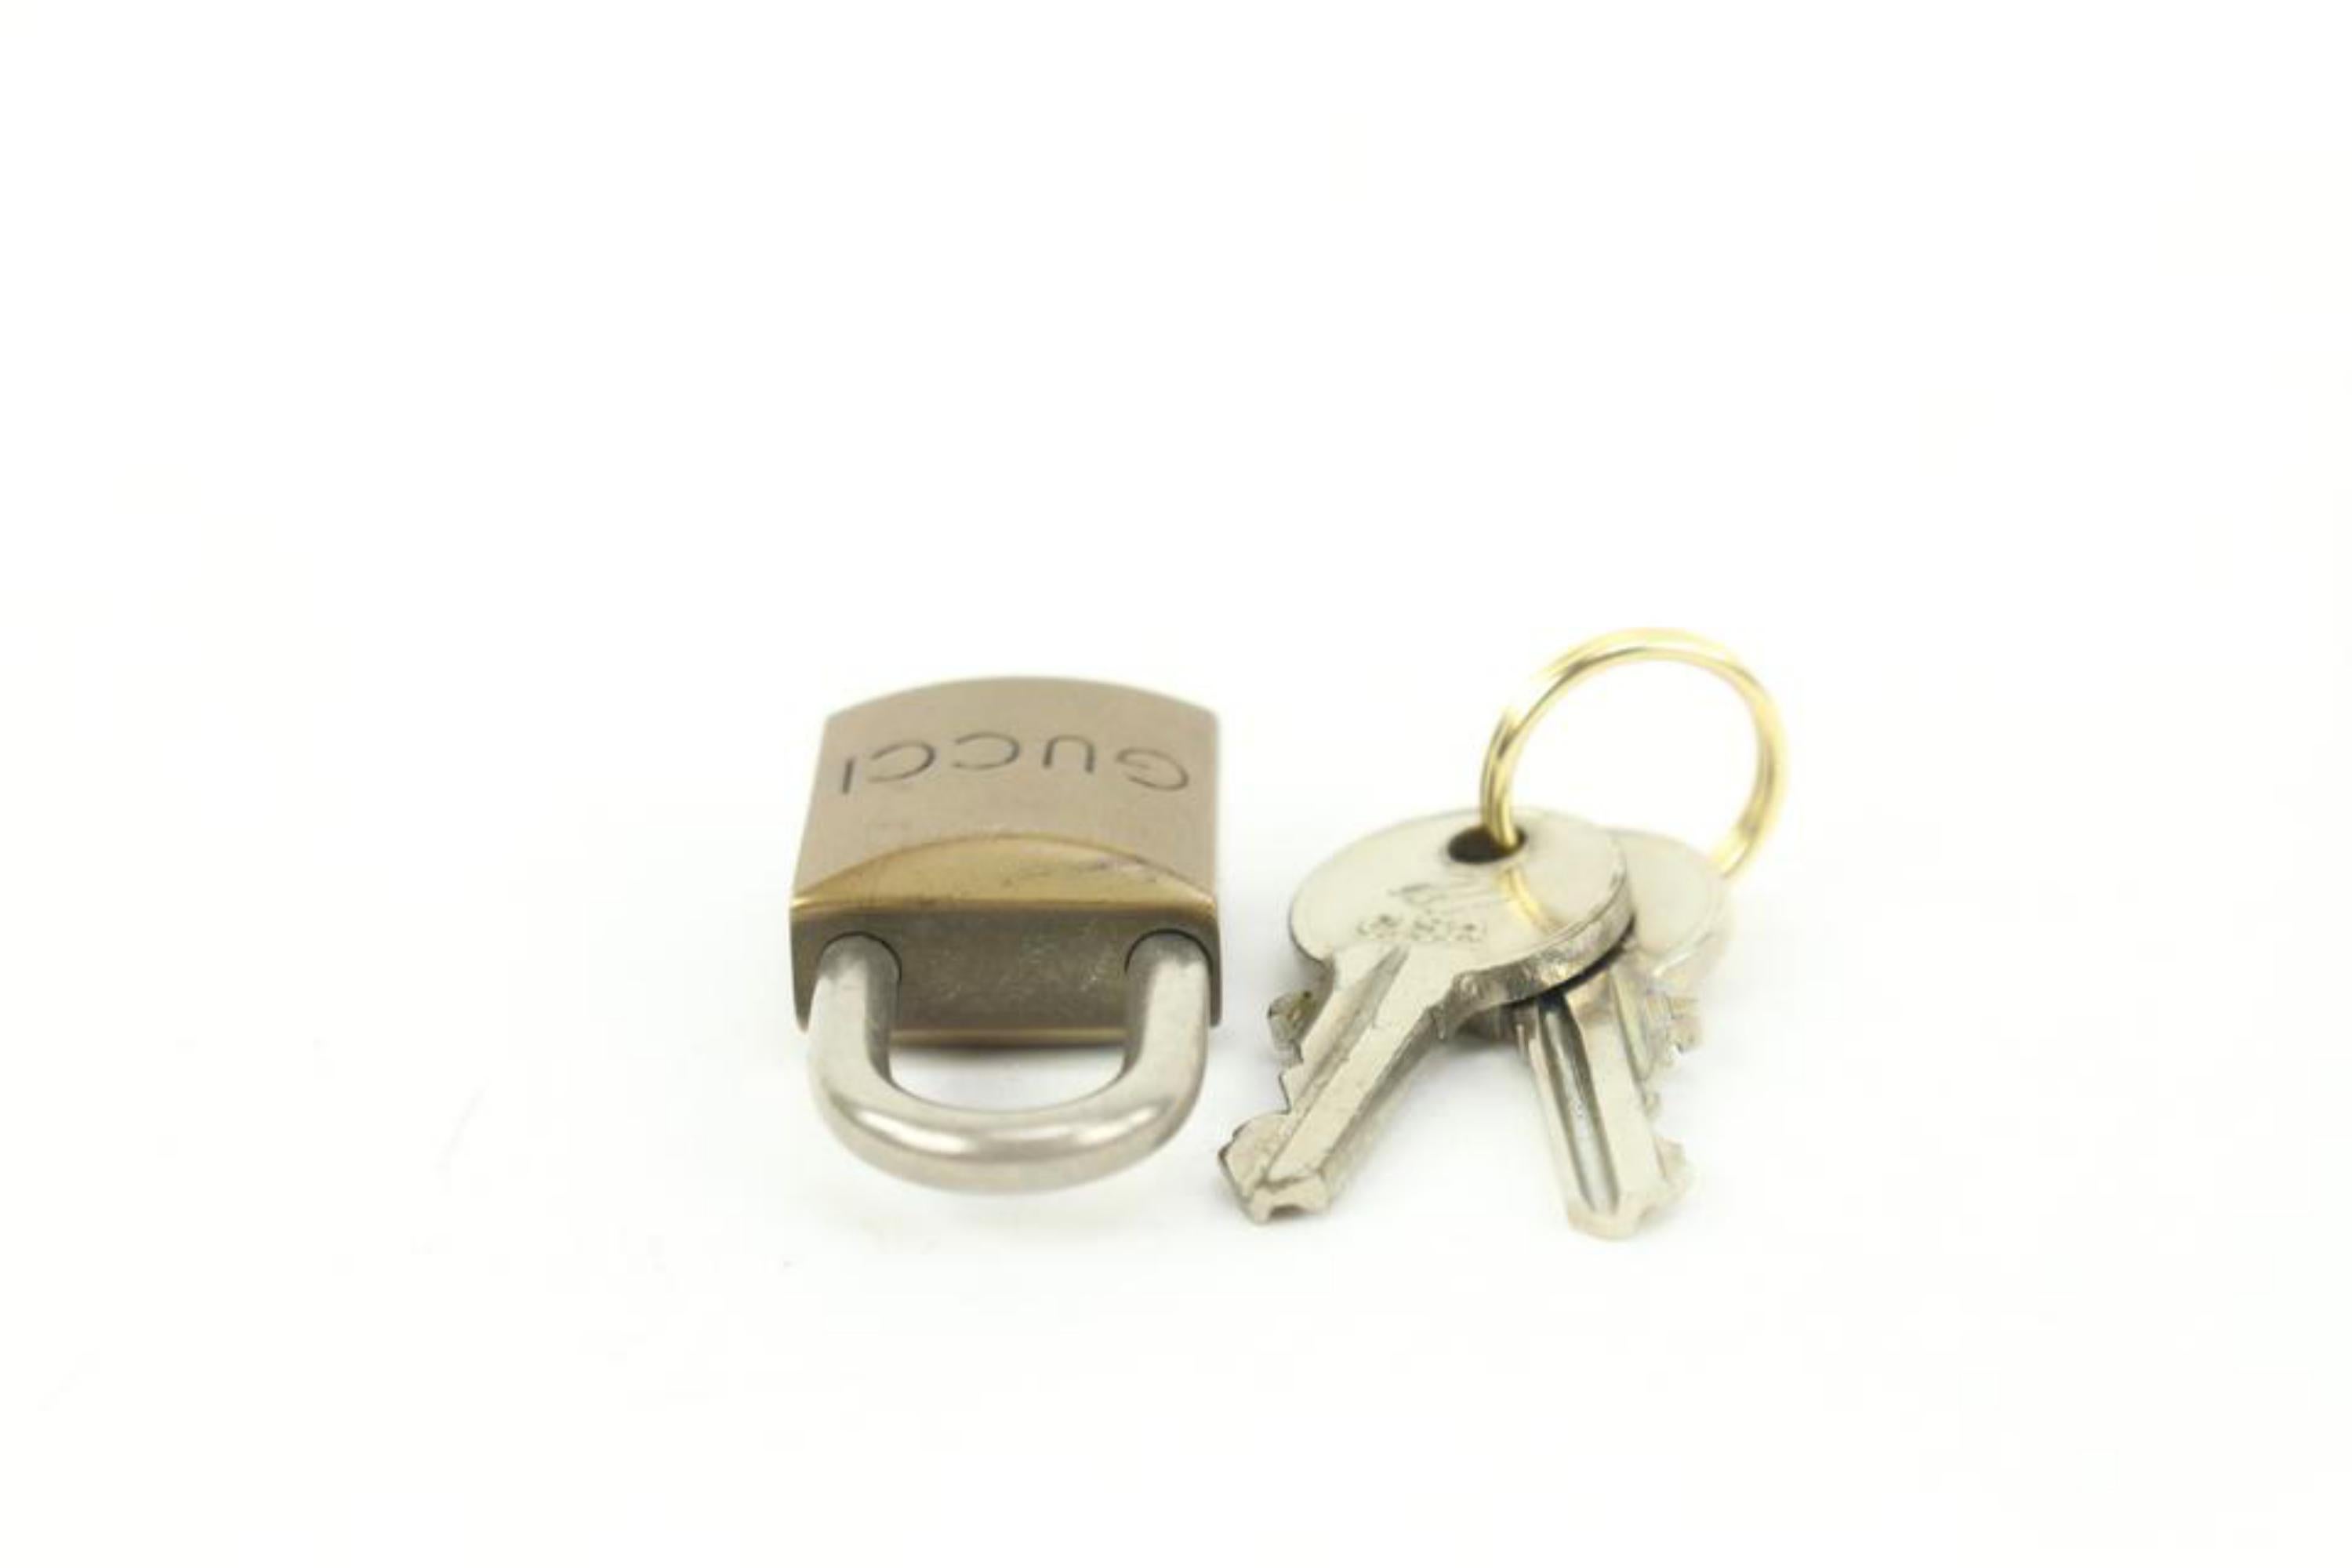 Gucci Vintage Brass Lock and Key Set Cadena Padlock Bag Charm 17g34s 1